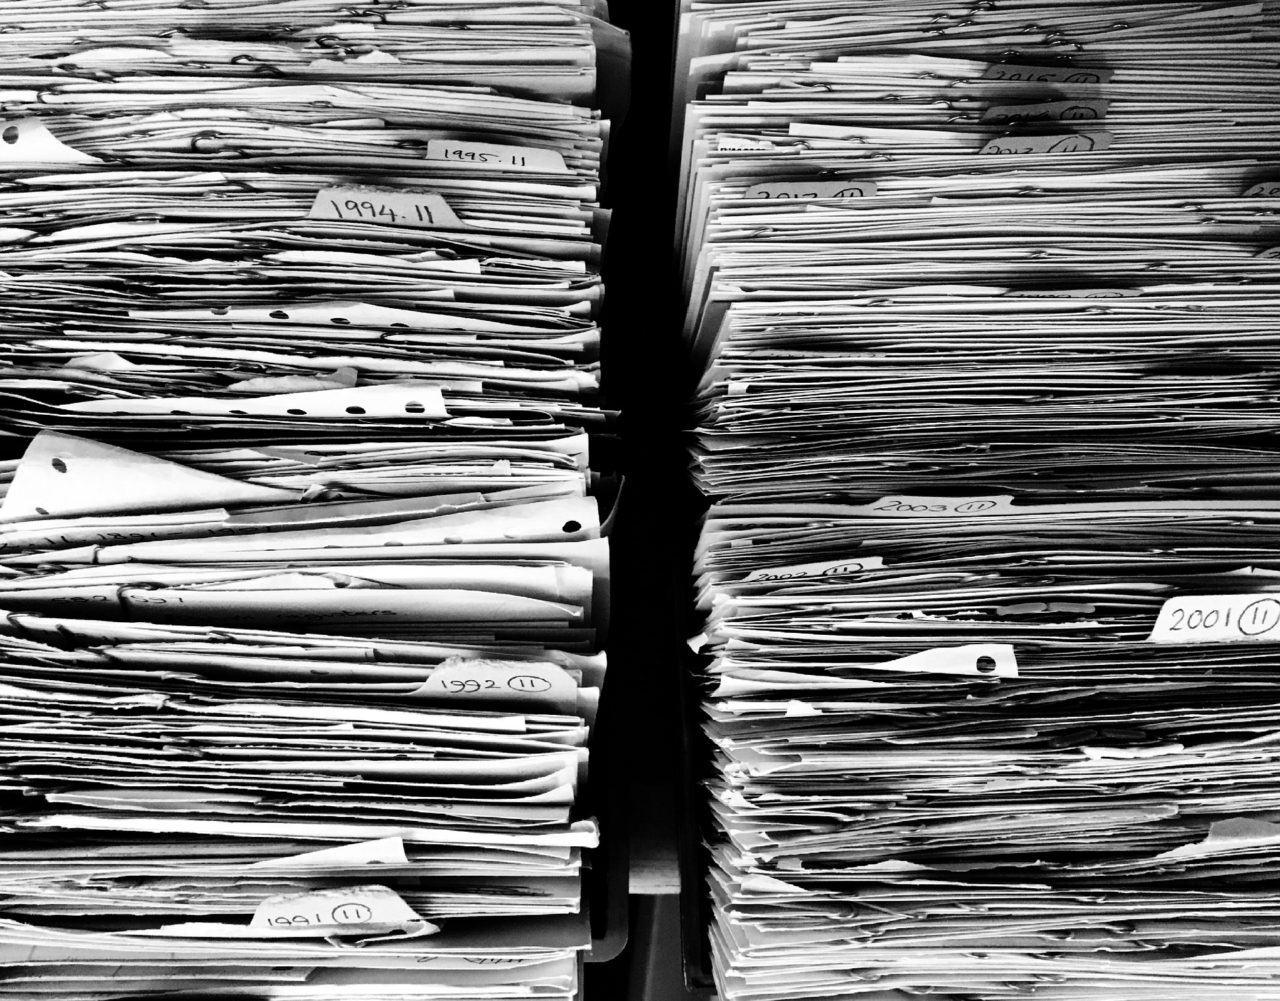 Greyscale of stacks of file folders